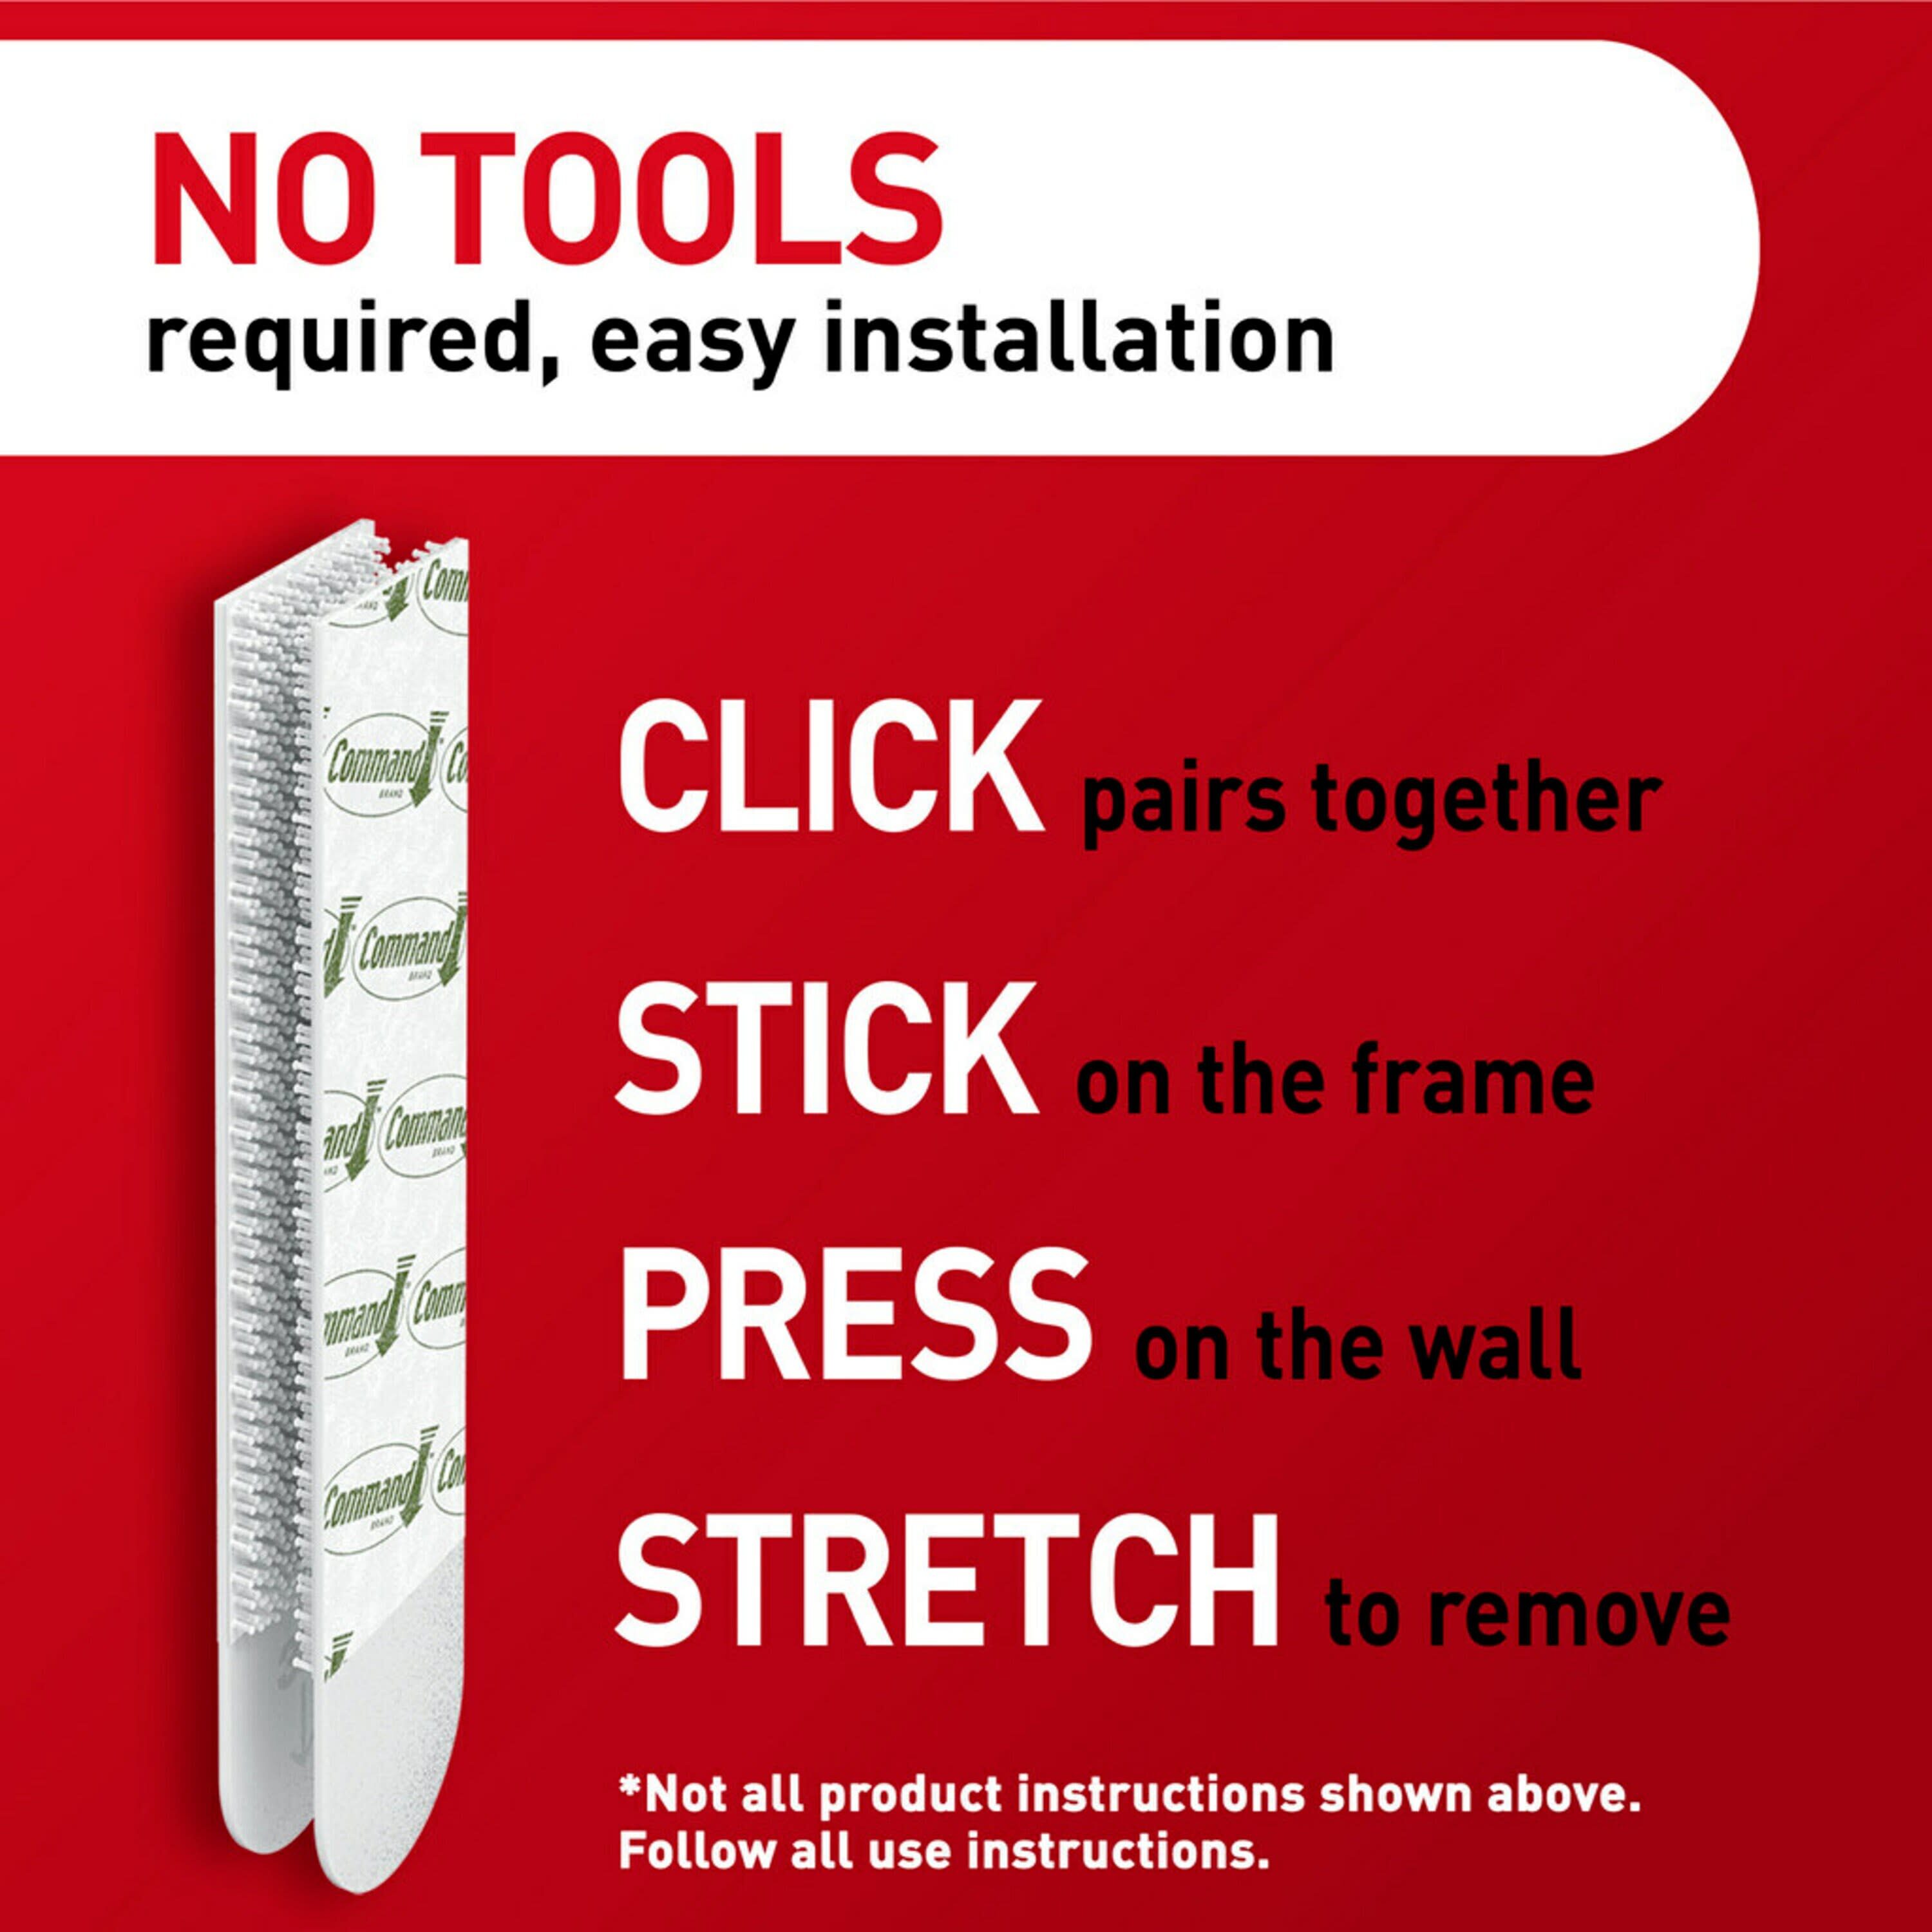 Command Mini Refill Adhesive Strips, Damage Free Hanging Wall Adhesive  Strips for mini indoor wall hooks, No Tools Removable Adhesive Strips for